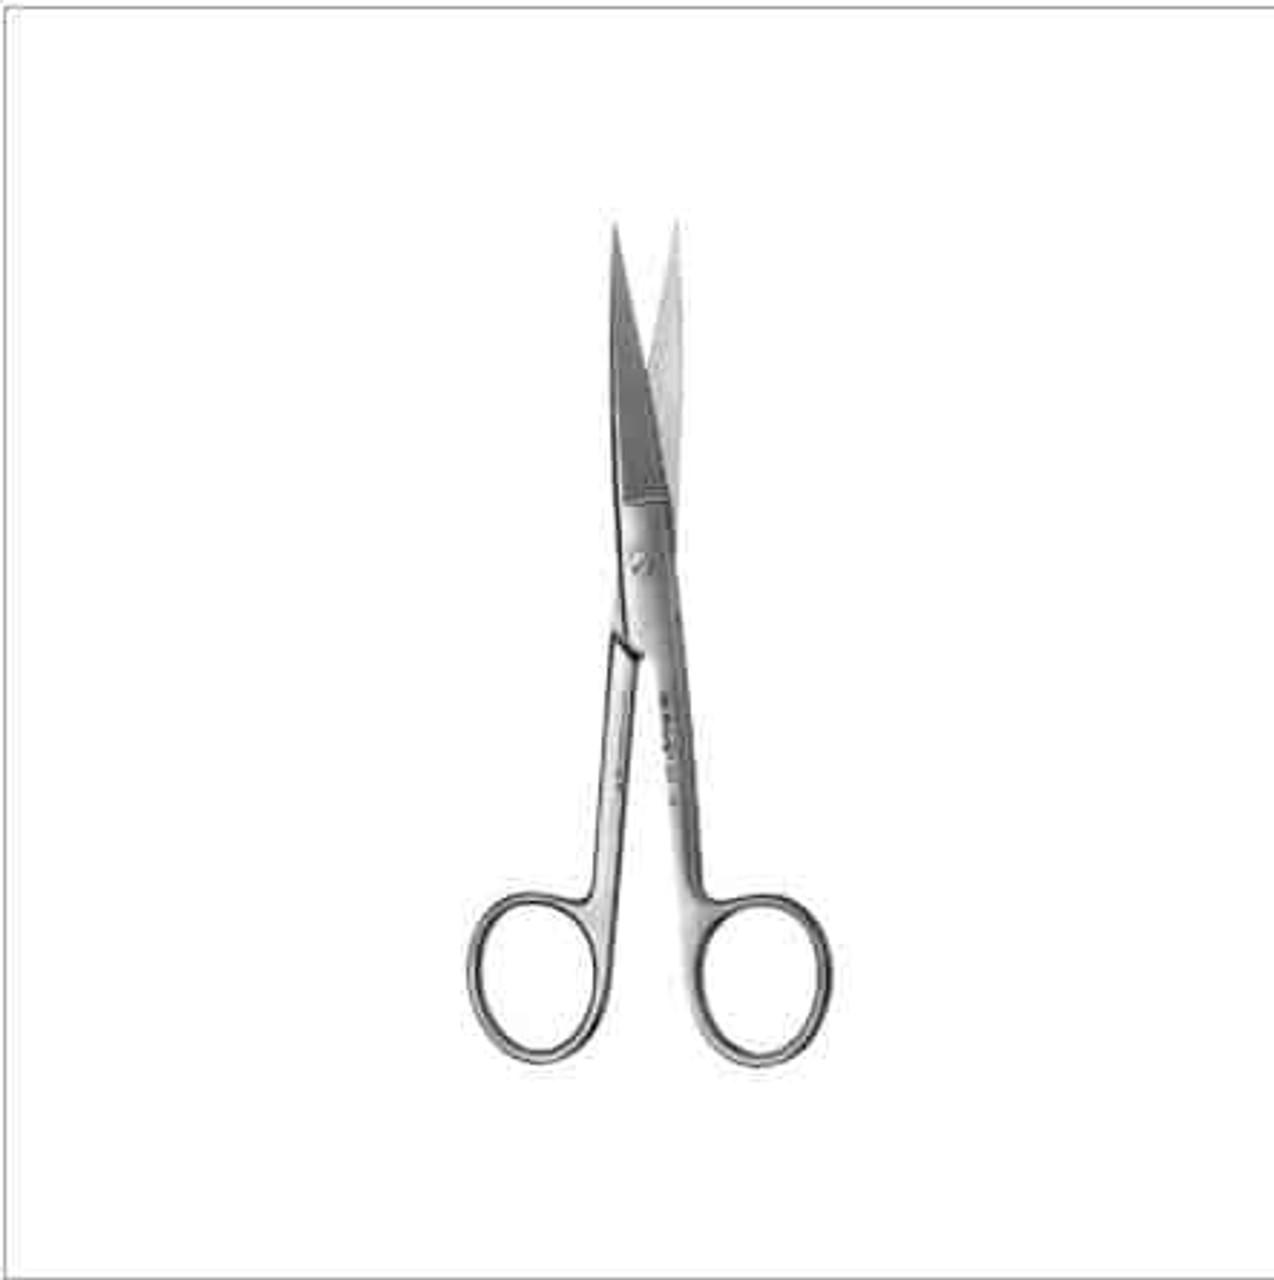 Hu-Friedy - Surgical Scissors - 21 S/Straight